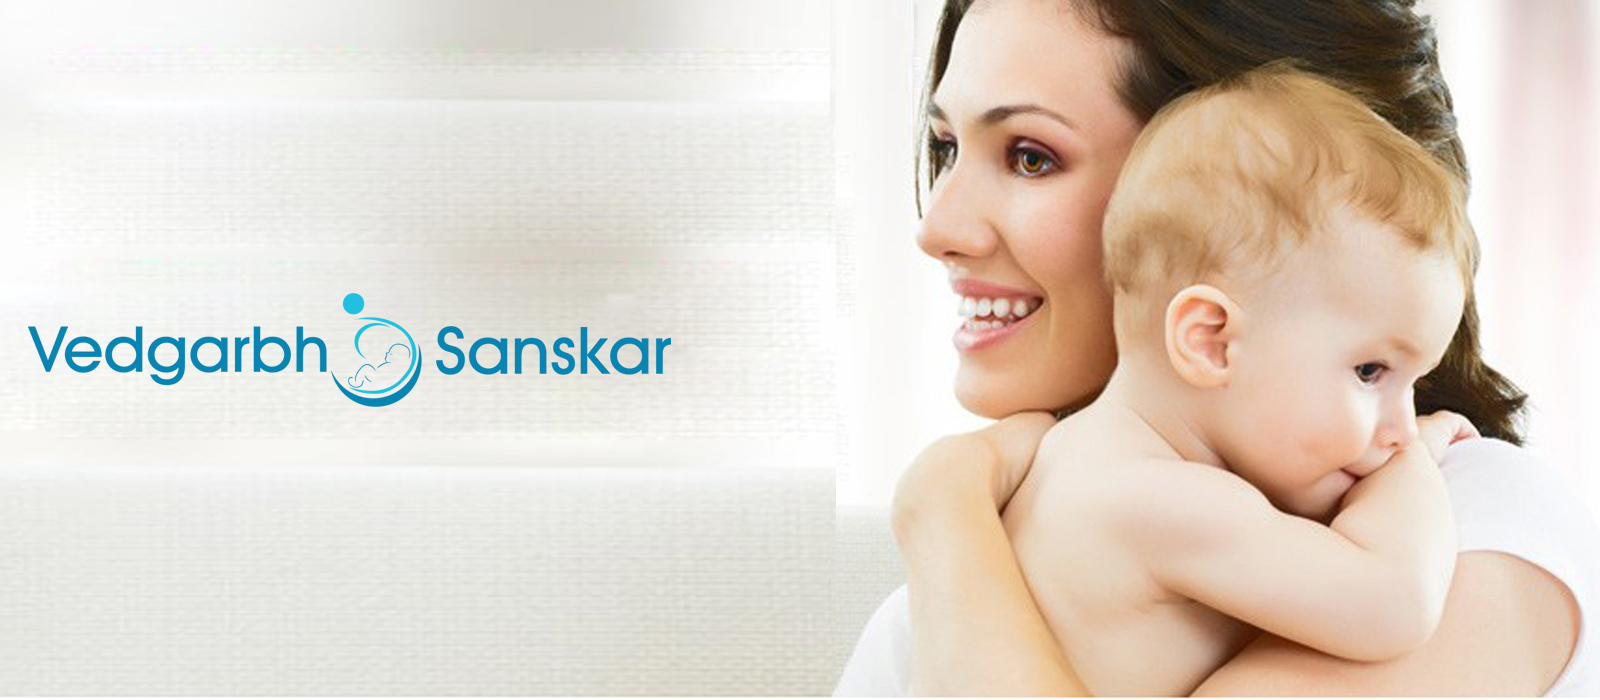 garbh sanskar before pregnancy